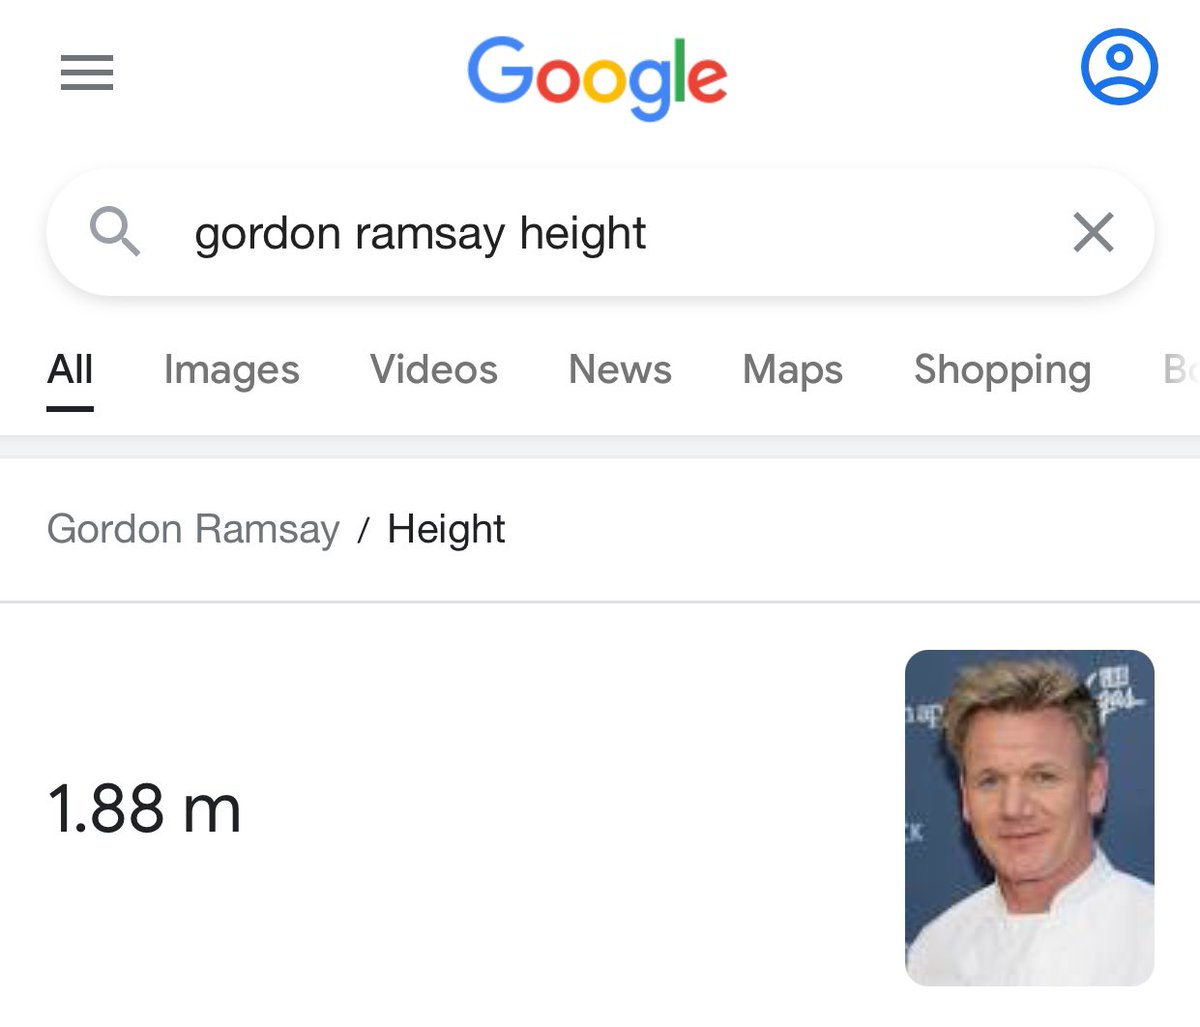 when gordon ramsay is taller than your bias https://t.co/BdIHw8Nxqu